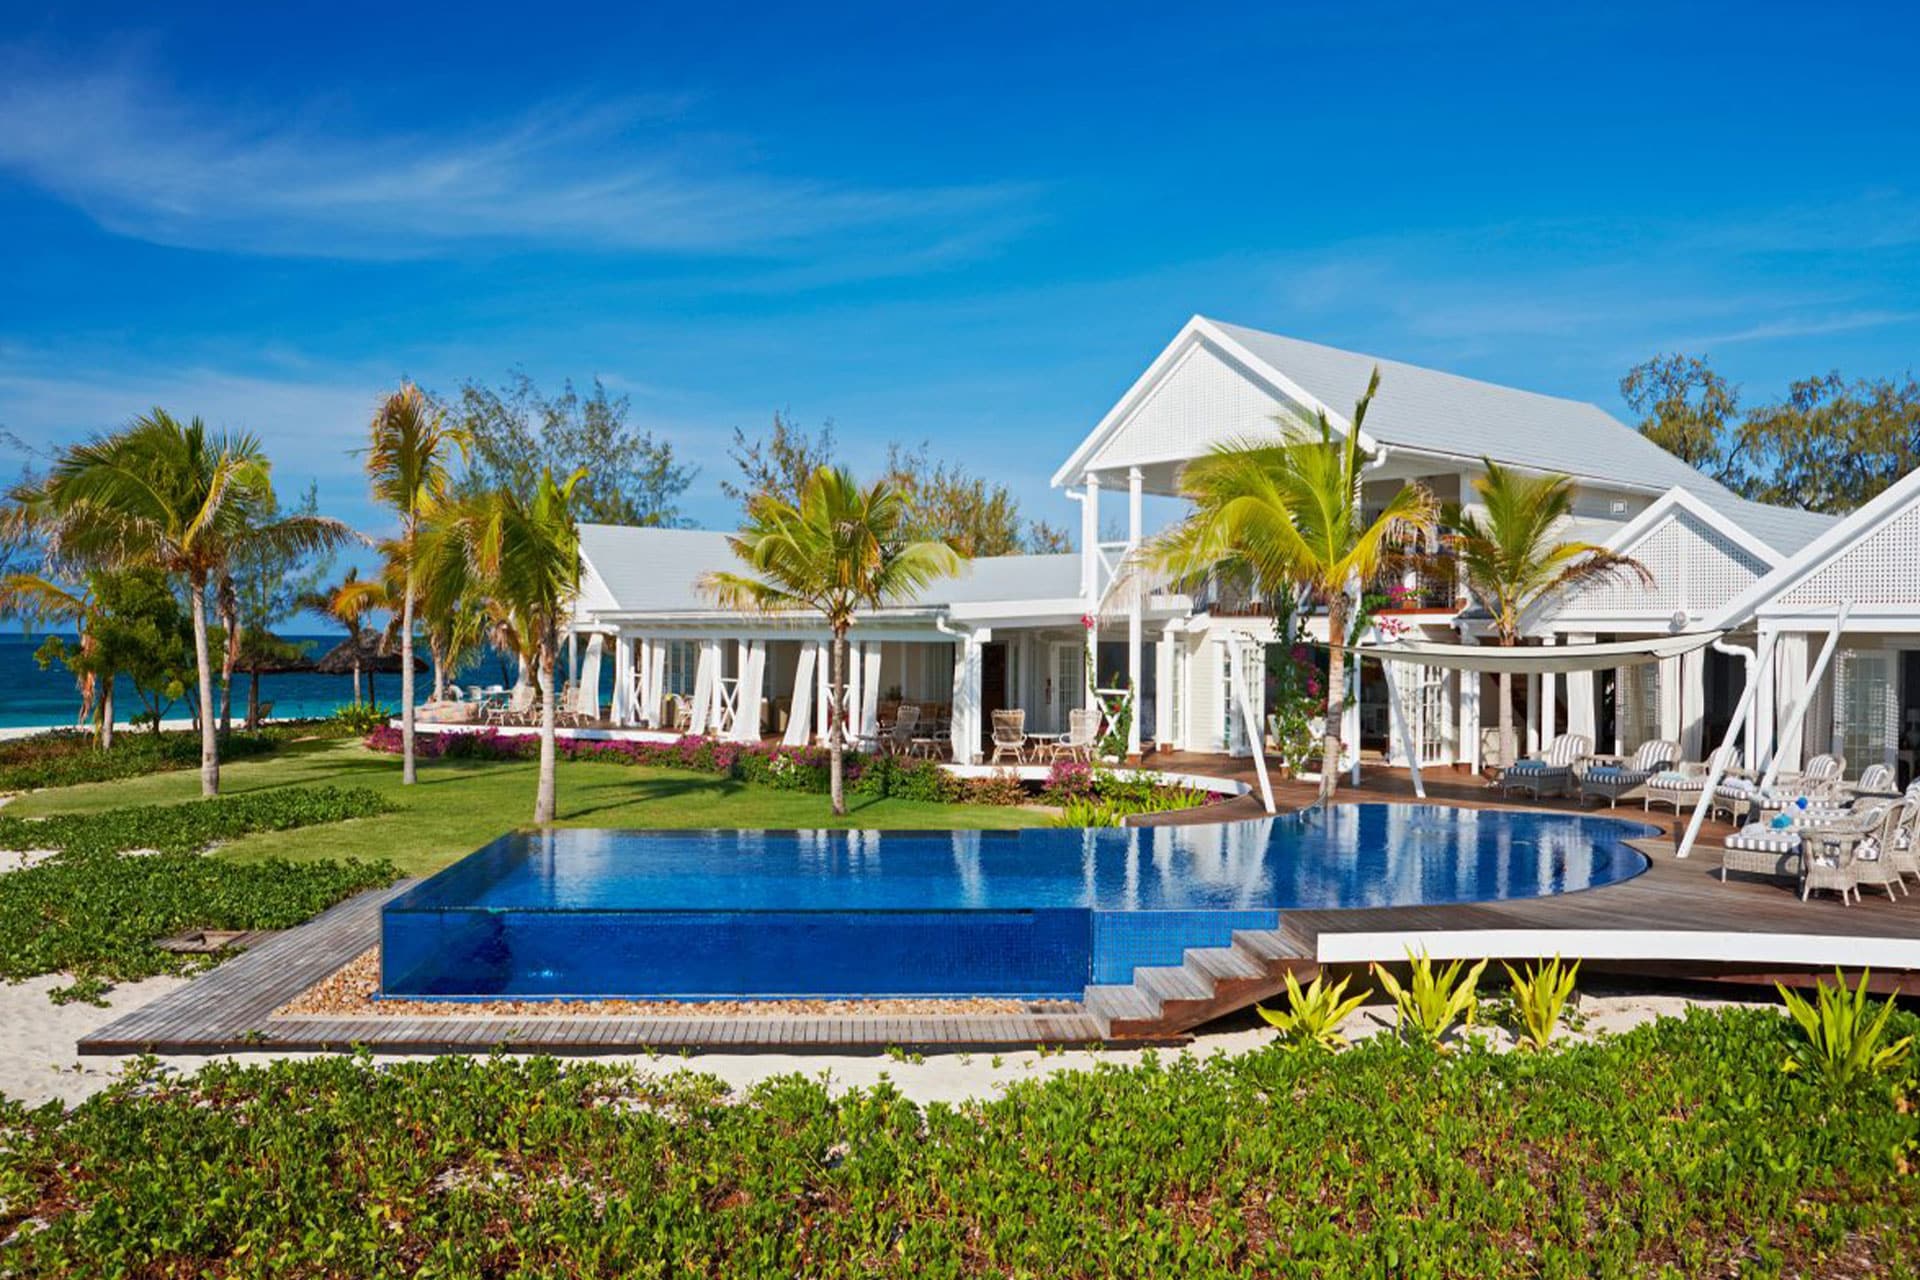 The luxury villa and swimming pool on Thanda Island.